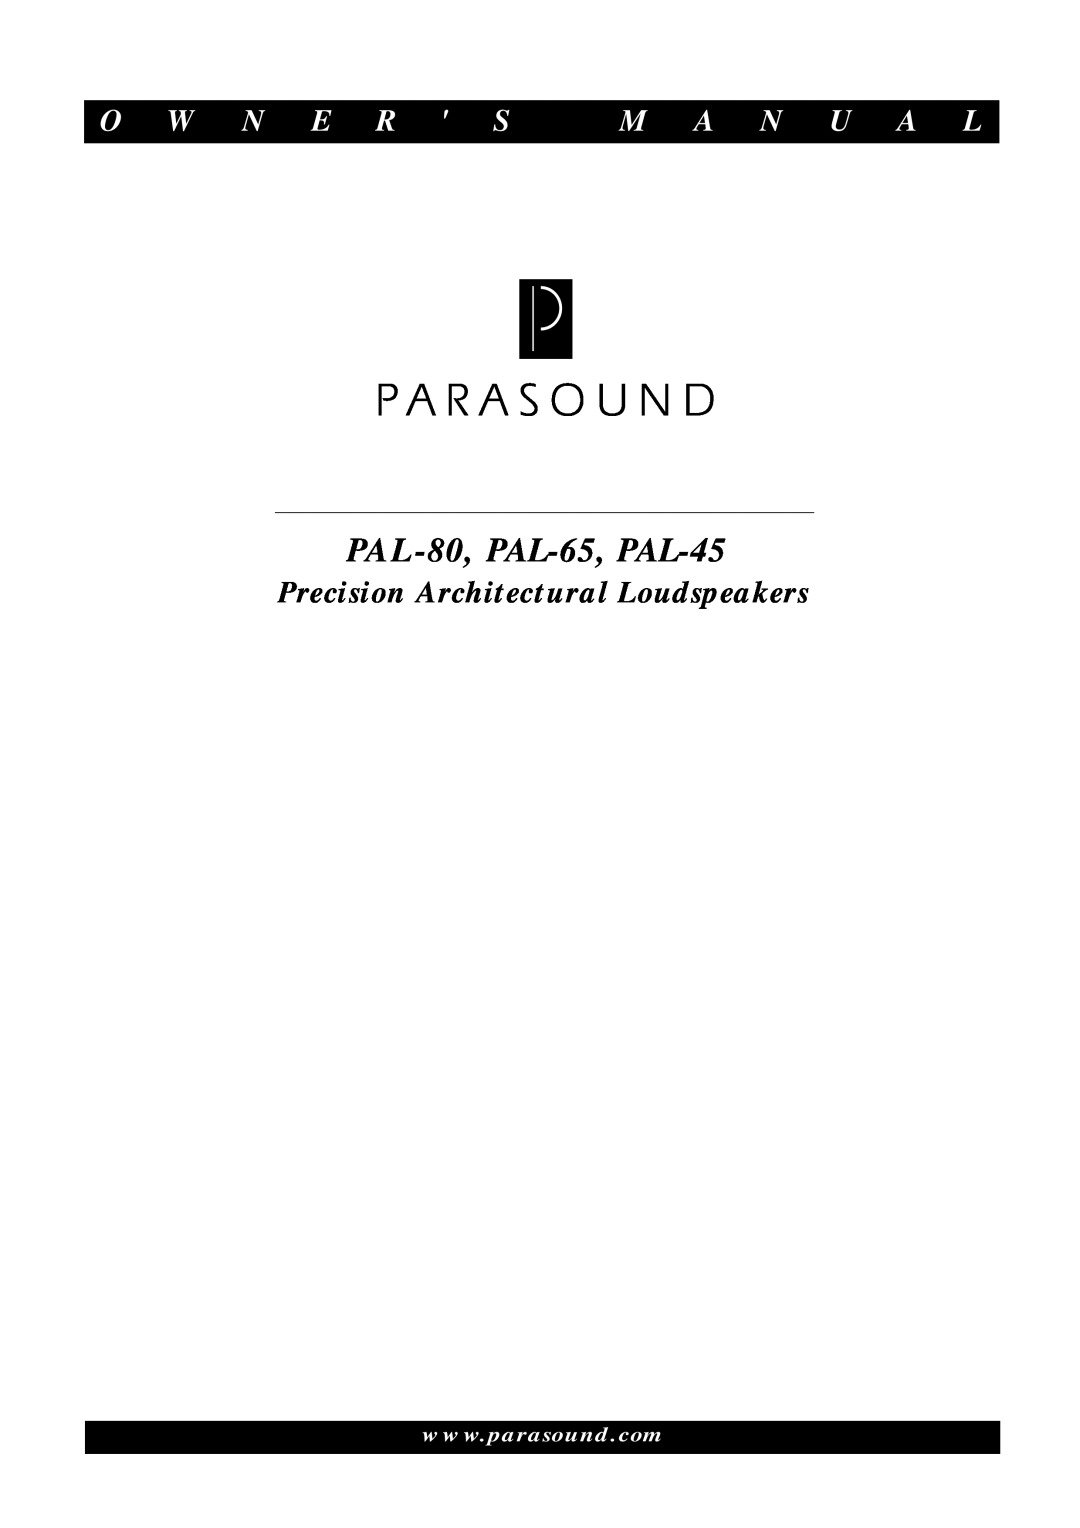 Parasound owner manual PAL-80, PAL-65, PAL-45, O W N E R S, M A N U A L, Precision Architectural Loudspeakers 